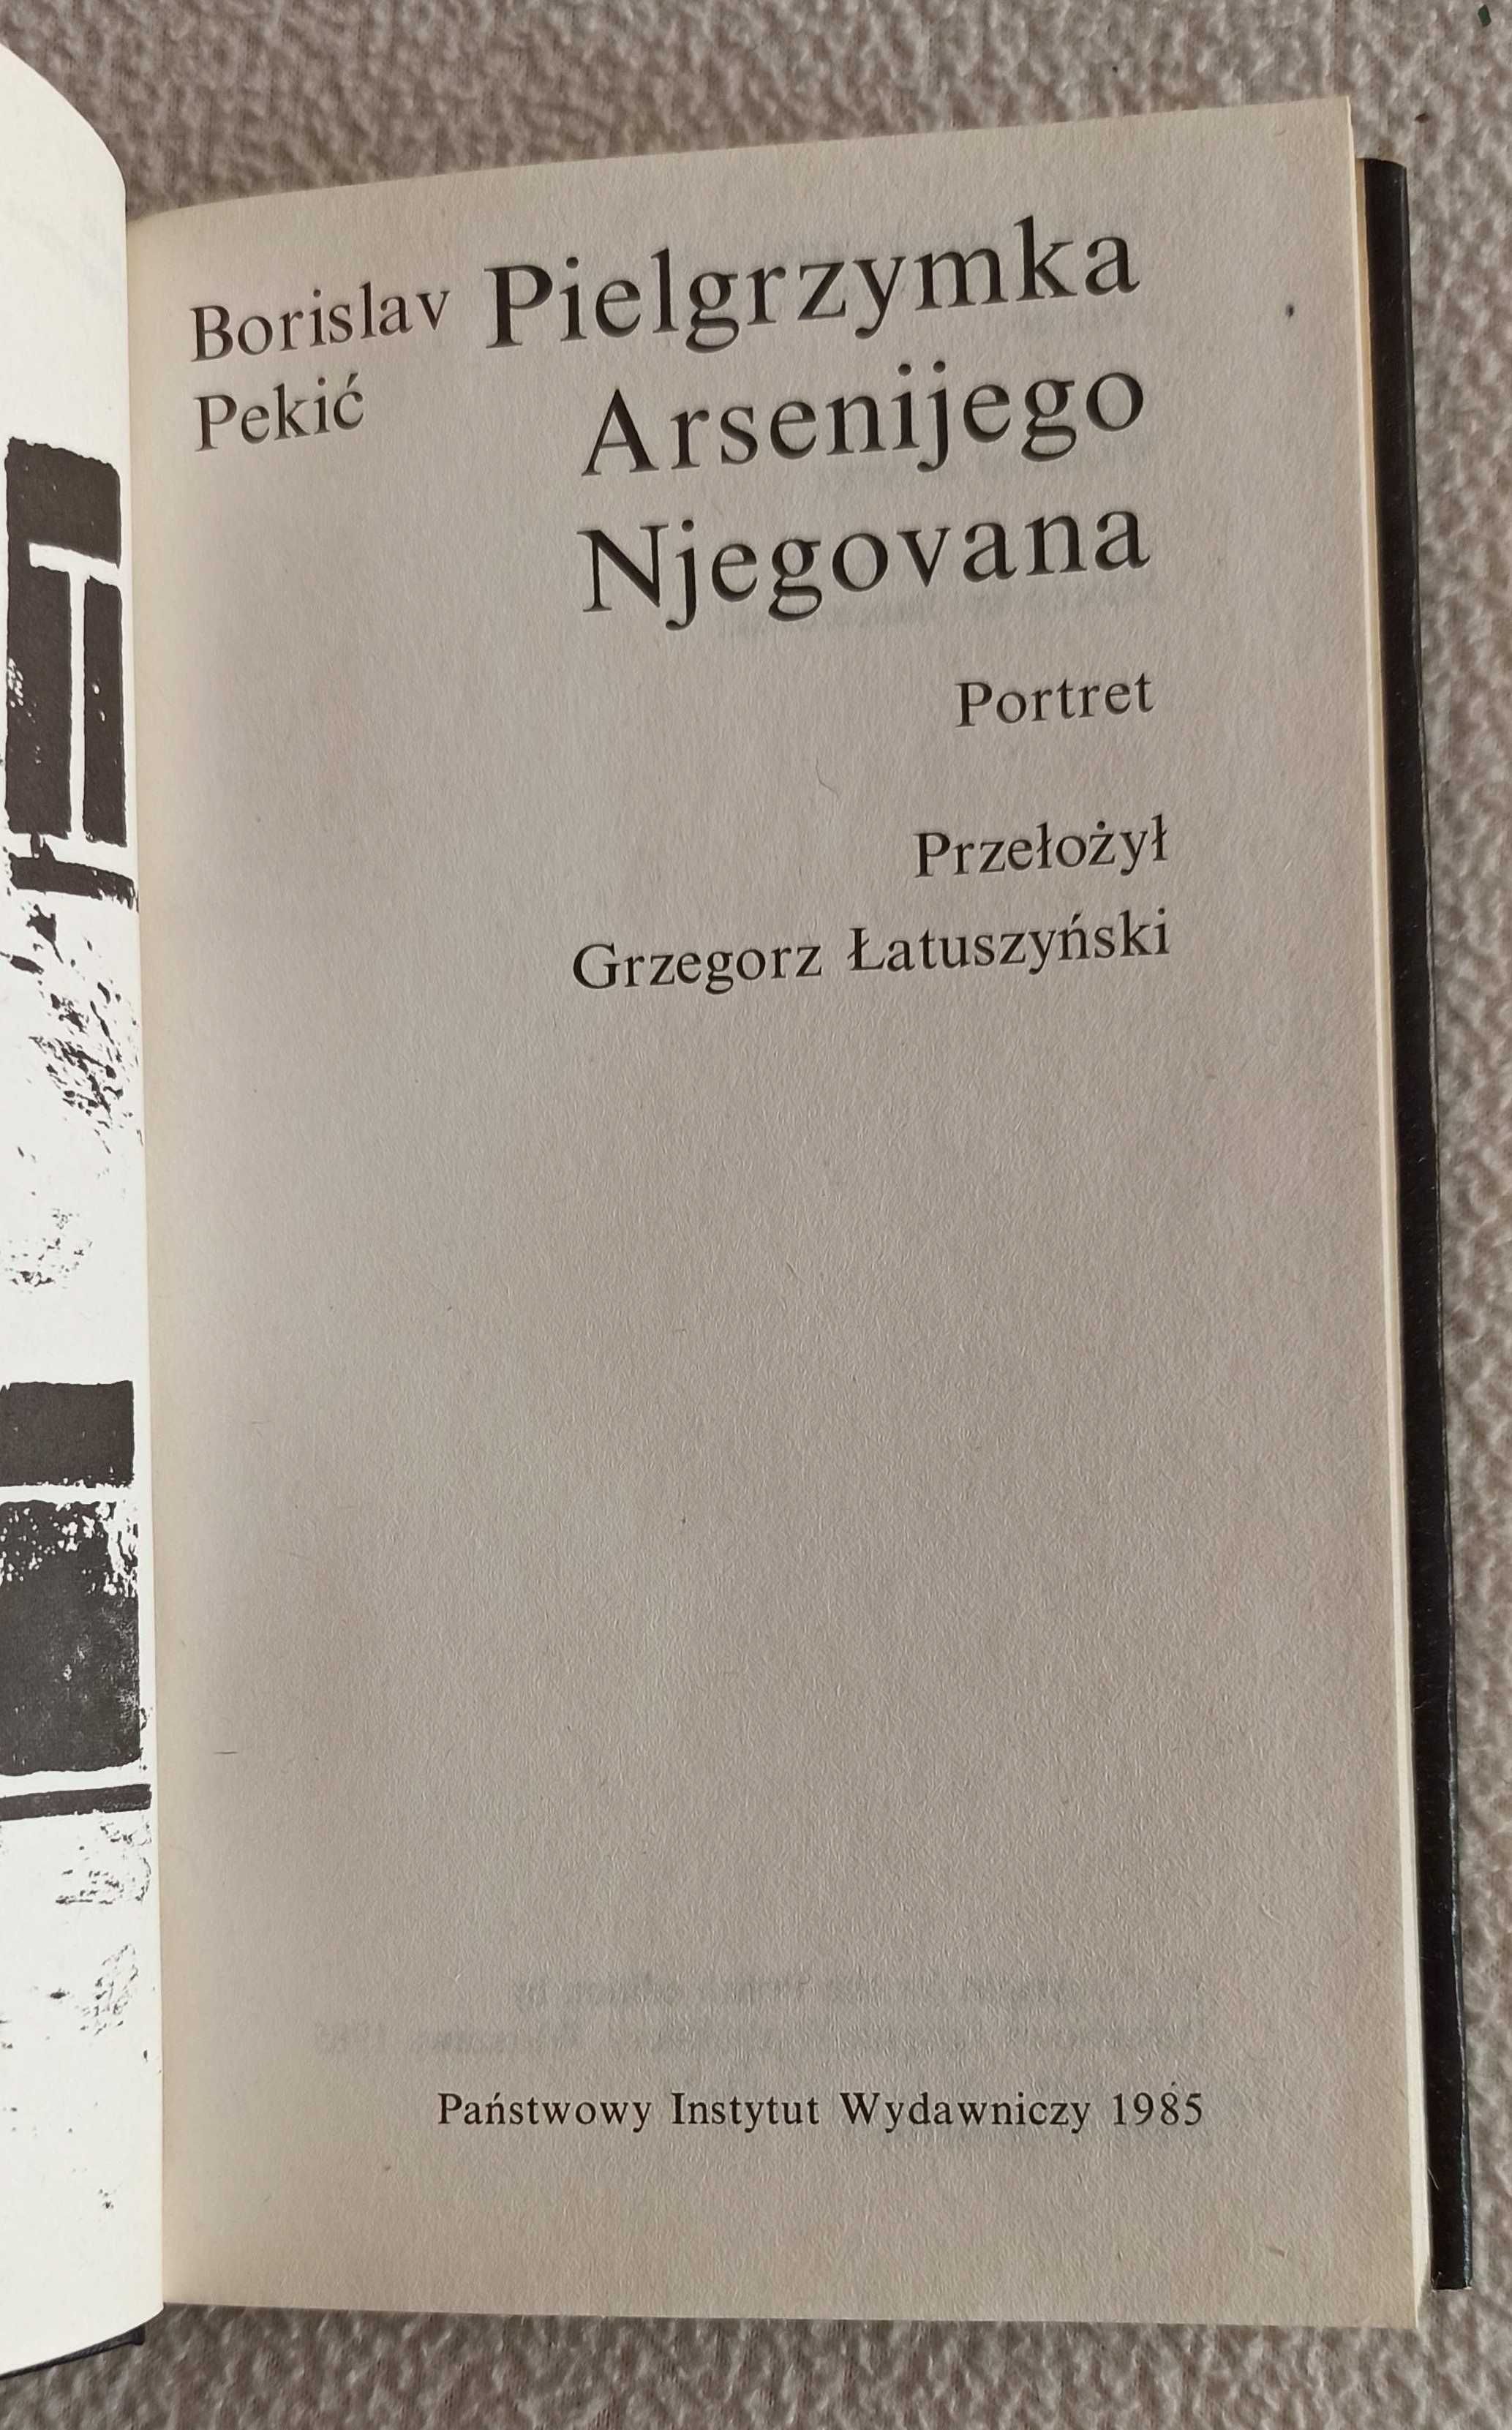 Borislav Pekić Pielgrzymka Arsenijego Njegovana